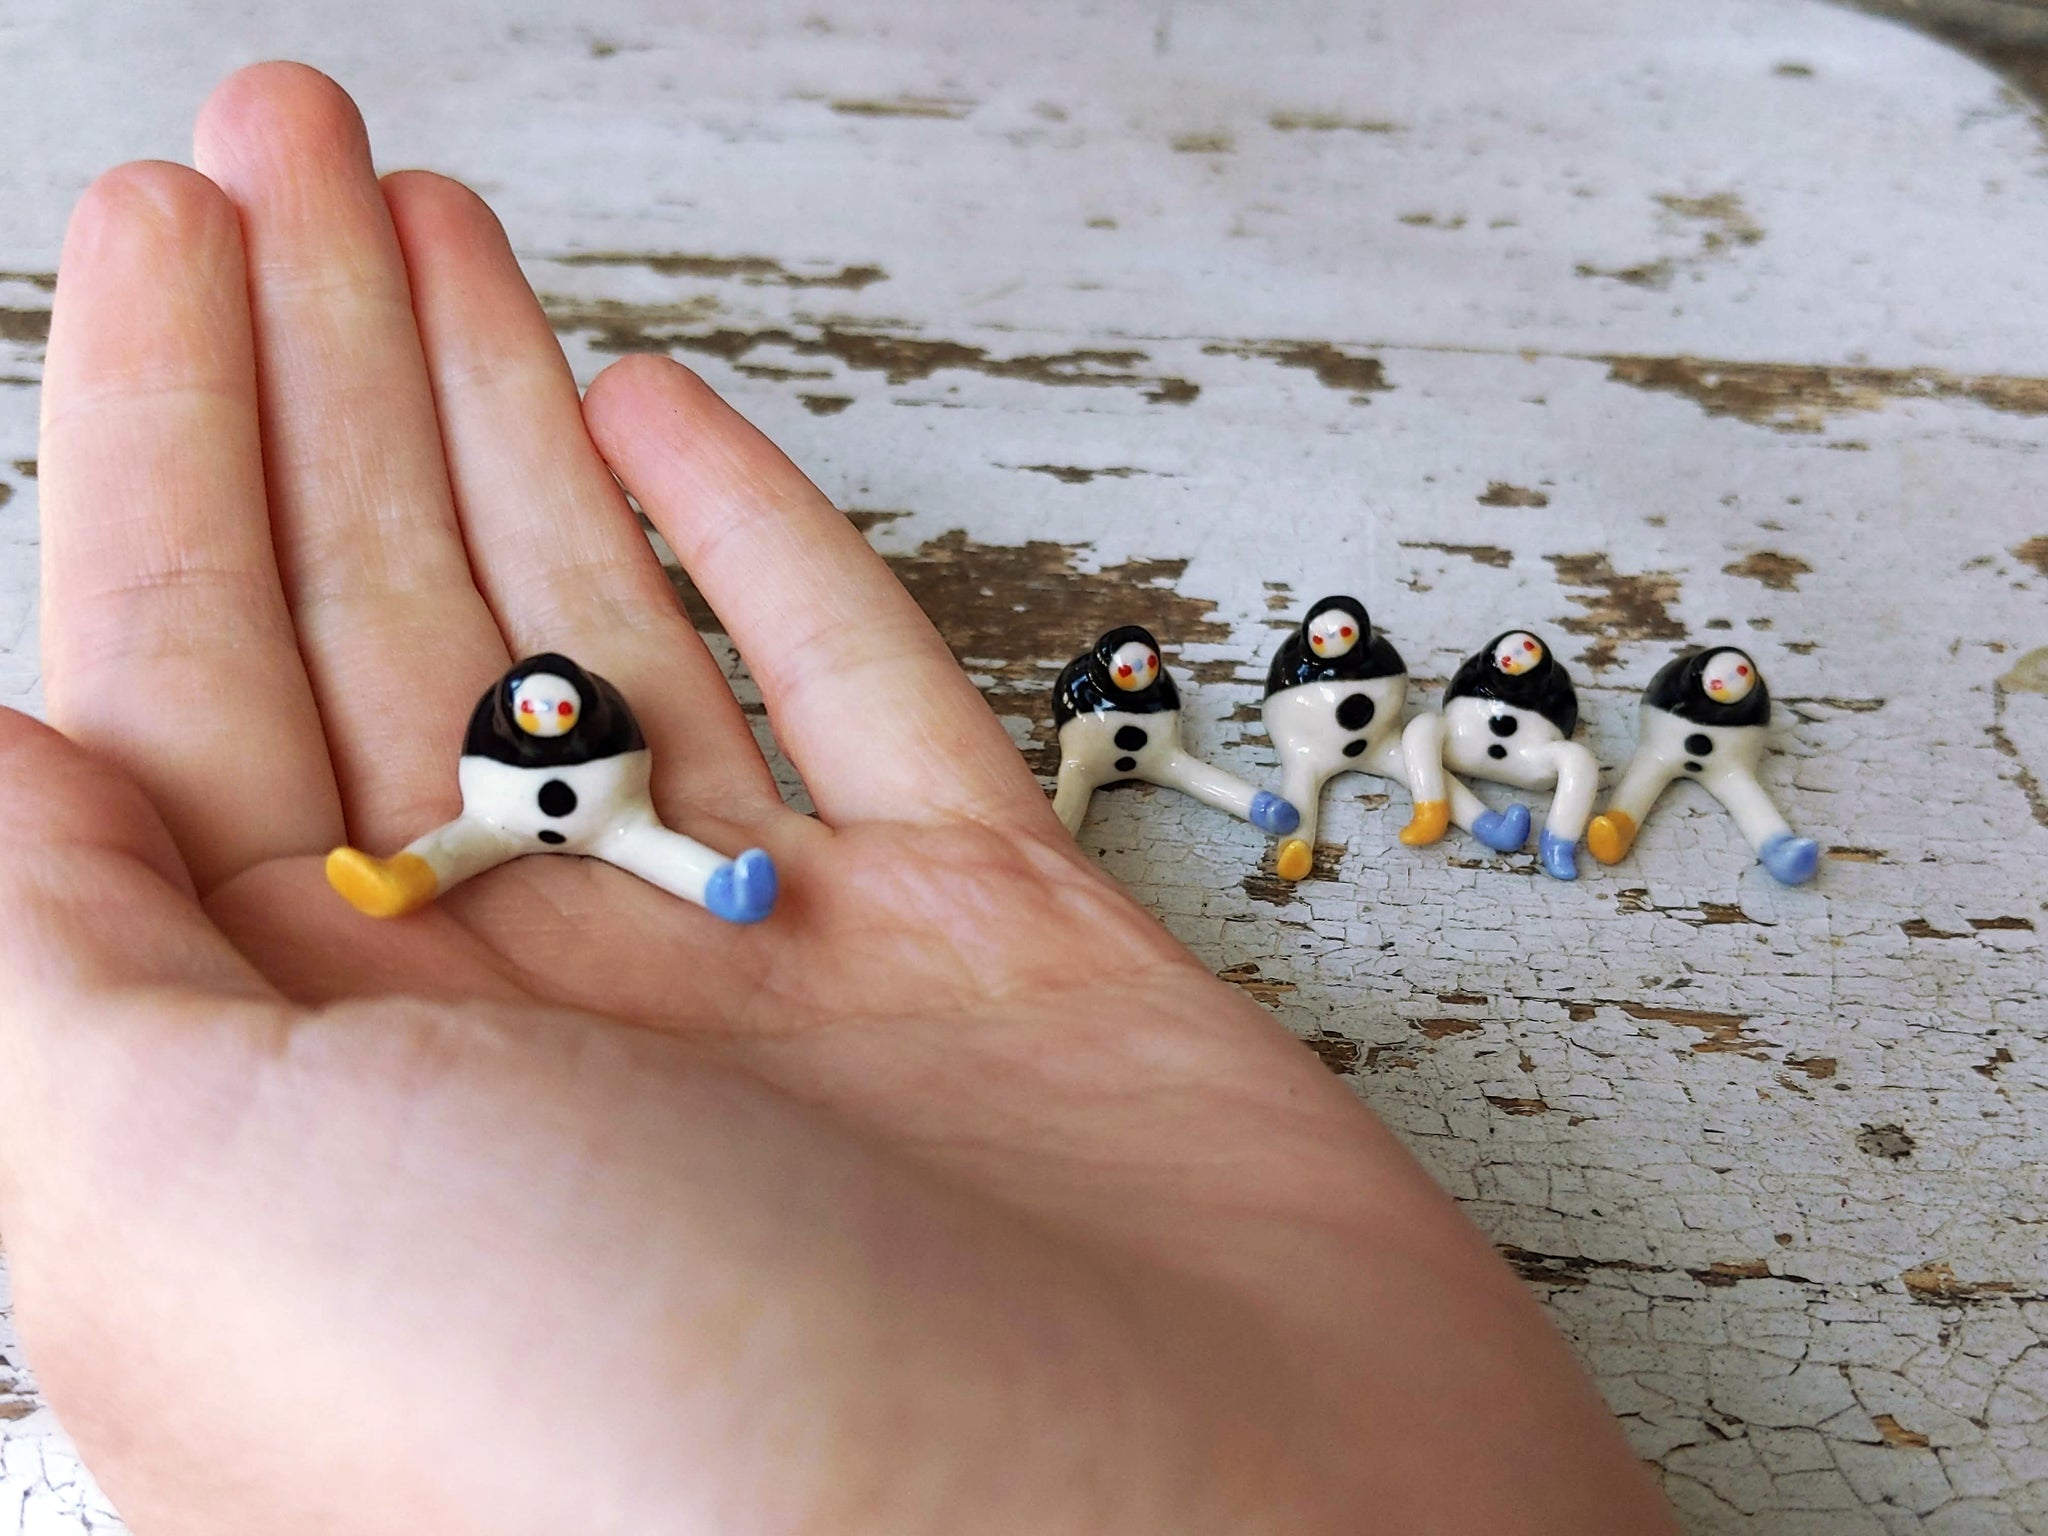 Tinybirdman Ceramic Art Toy [Extra Small, Pack of 5]